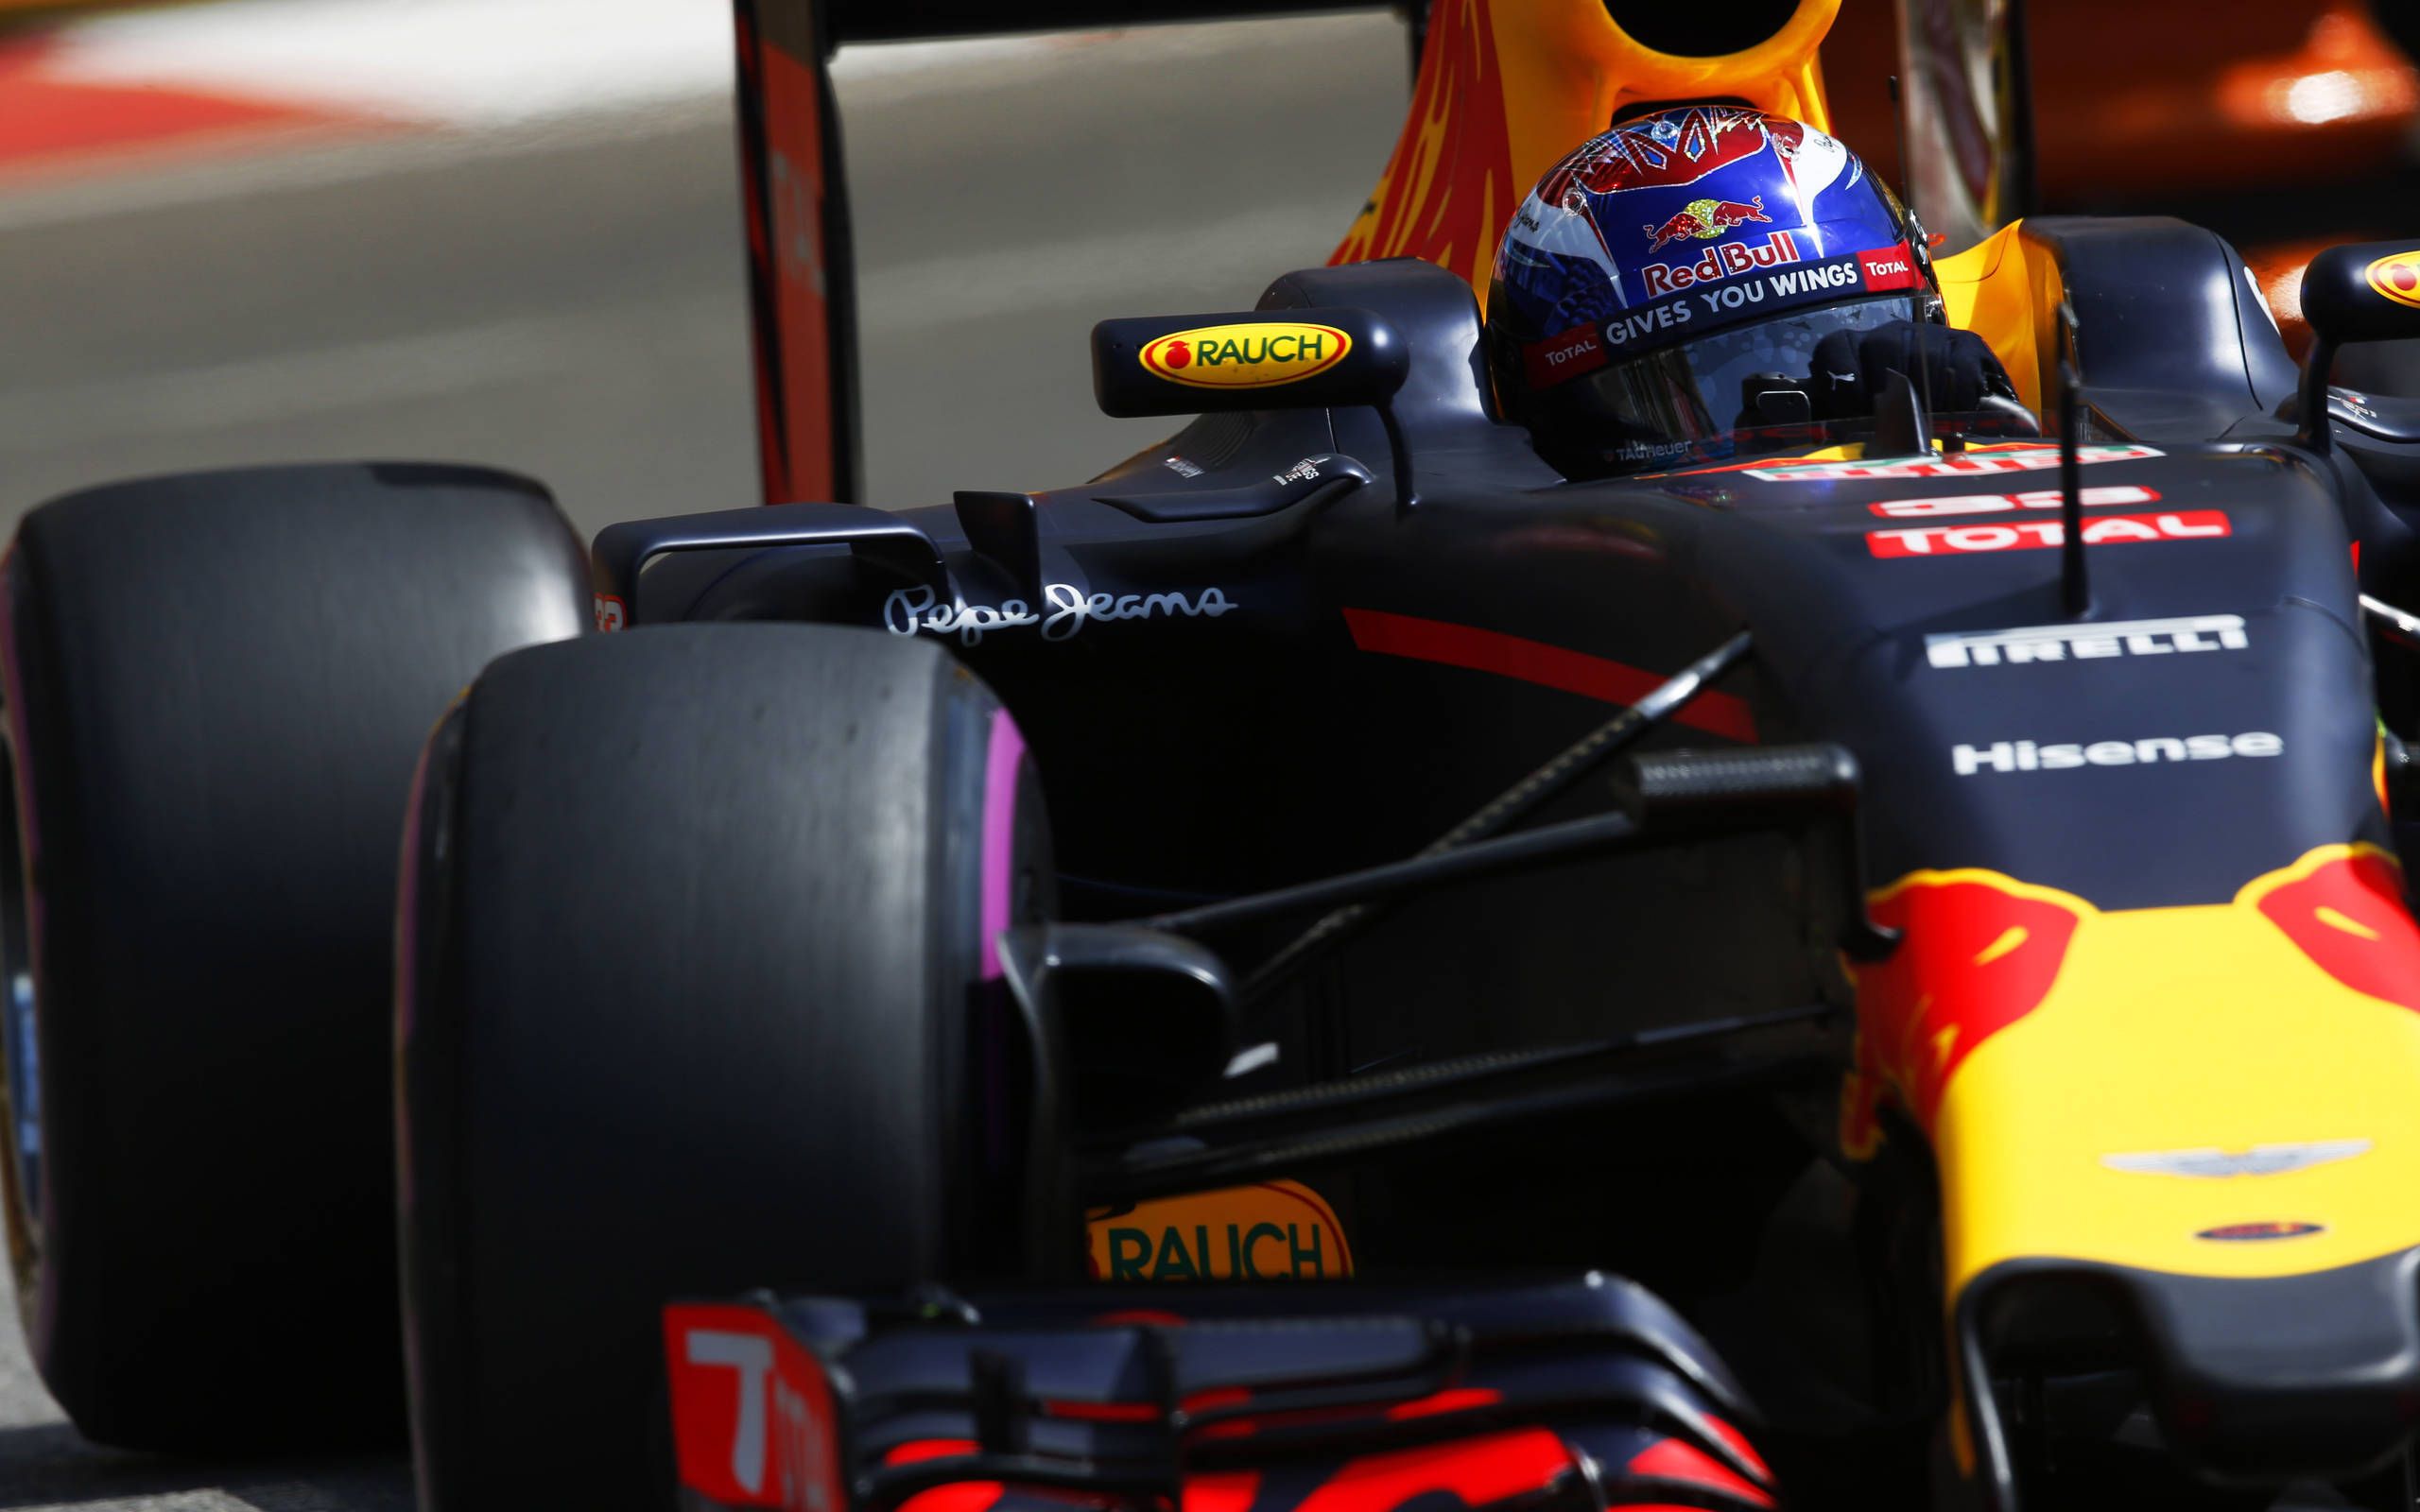 Zus kolf revolutie Max Verstappen says Red Bull F1 will continue to beat Ferrari